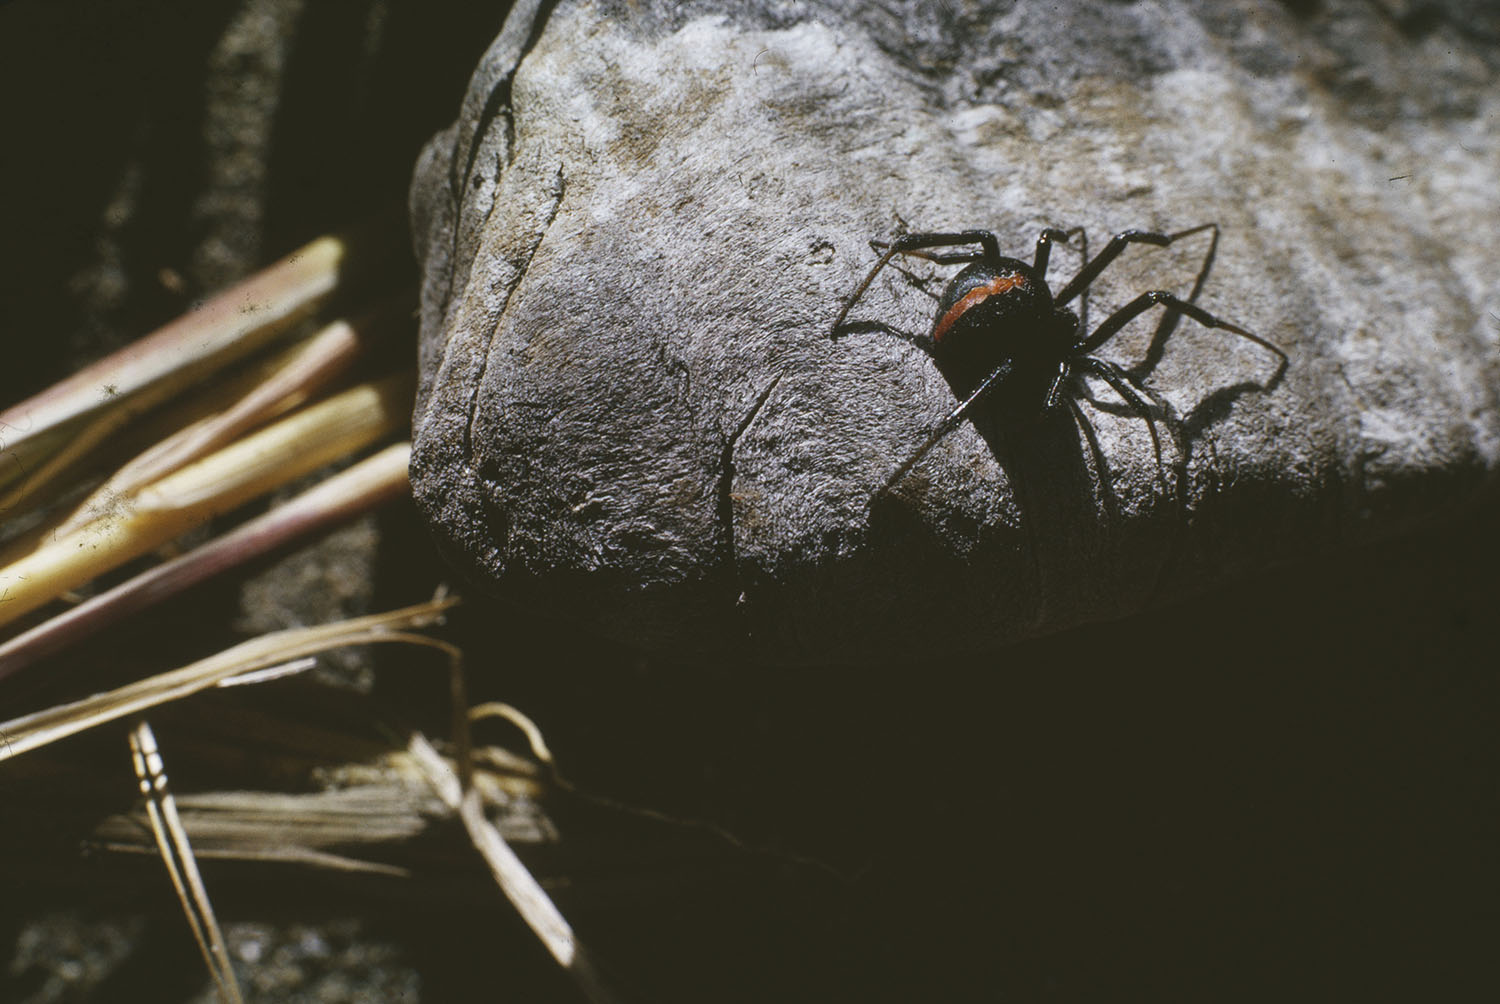 a katipō spider on a rock